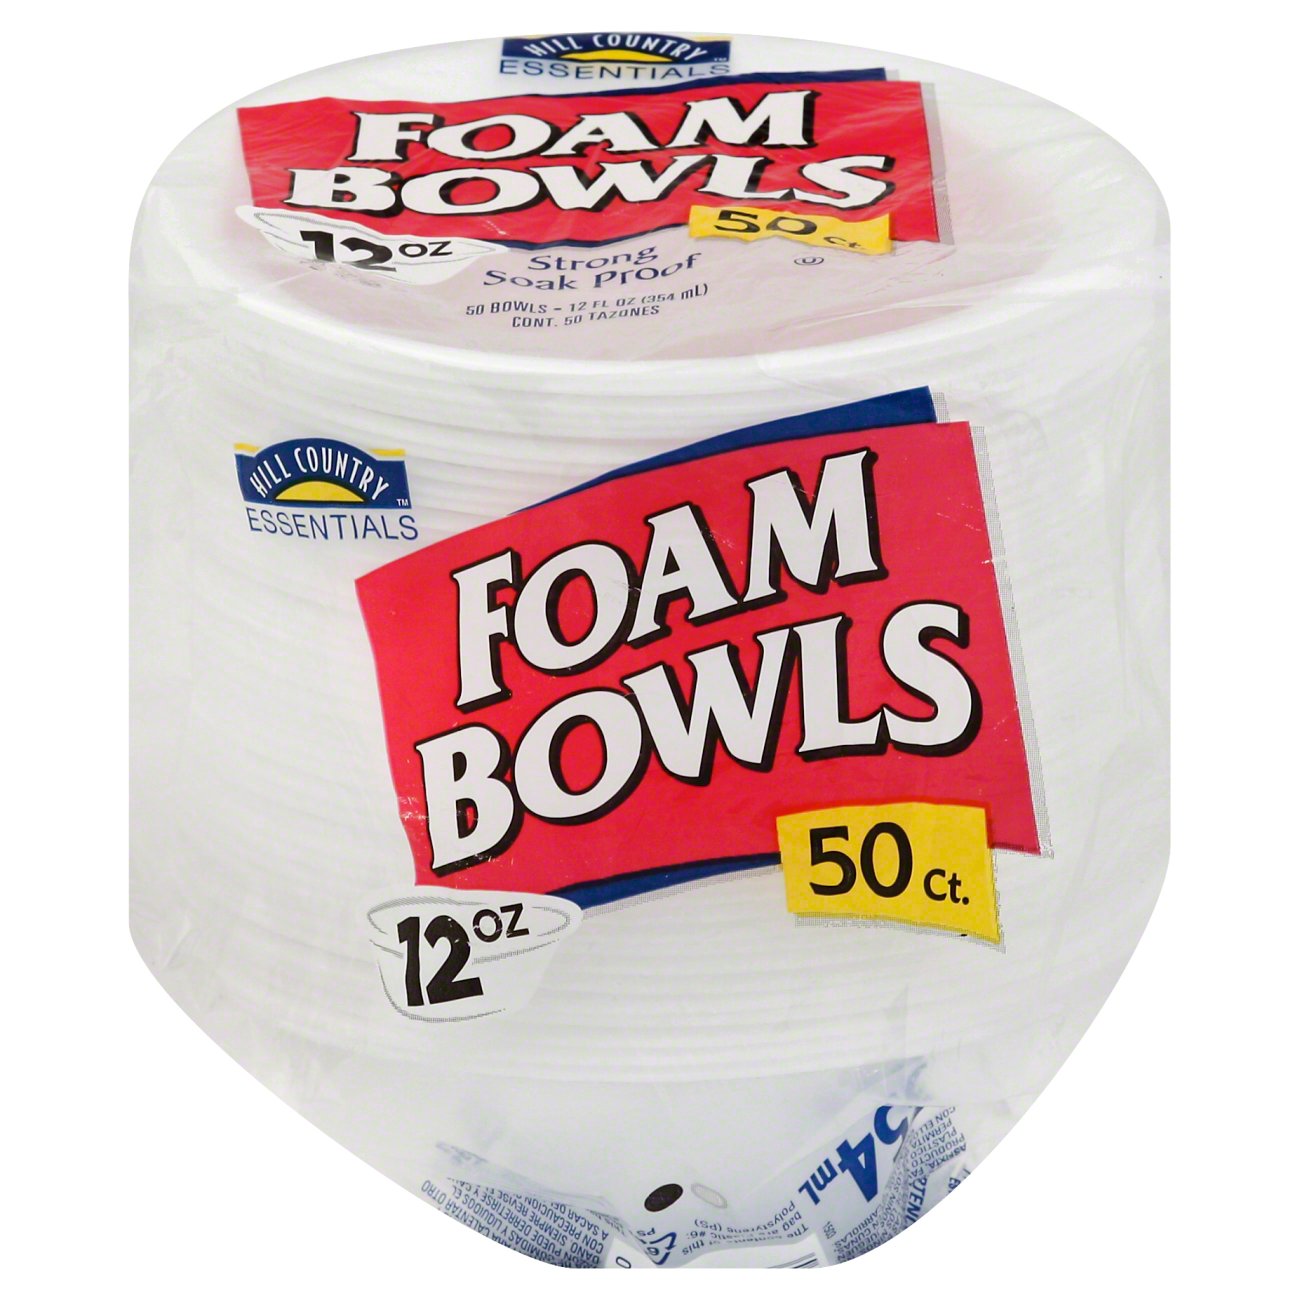 Hefty Everyday Disposable Foam Bowls, 12 oz, 50 ct